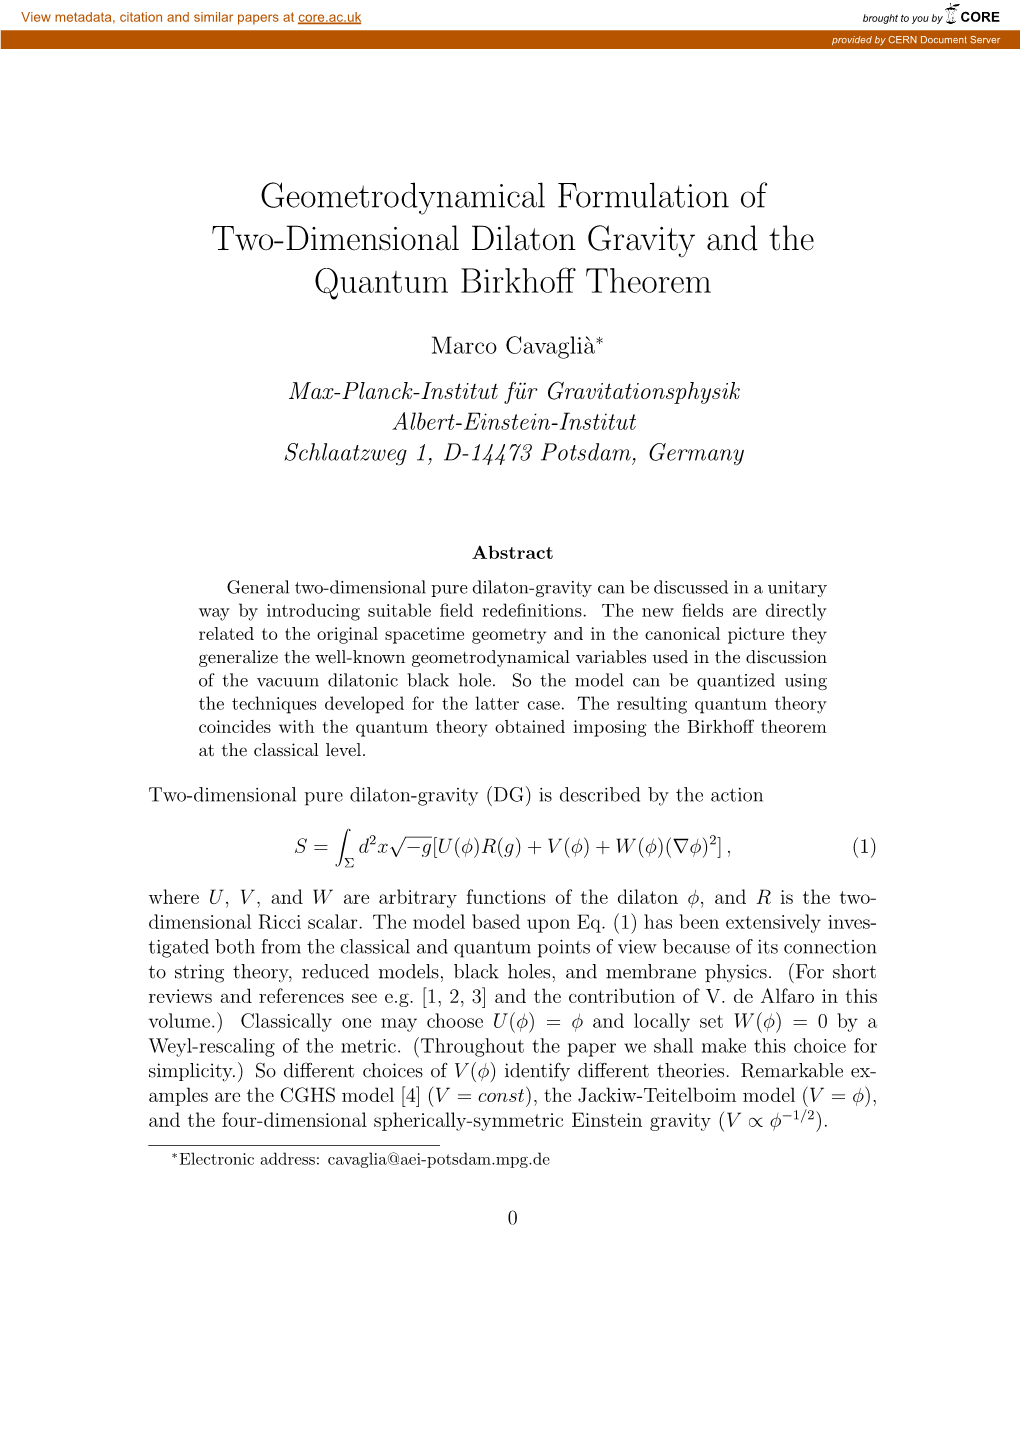 Geometrodynamical Formulation of Two-Dimensional Dilaton Gravity and the Quantum Birkhoﬀ Theorem